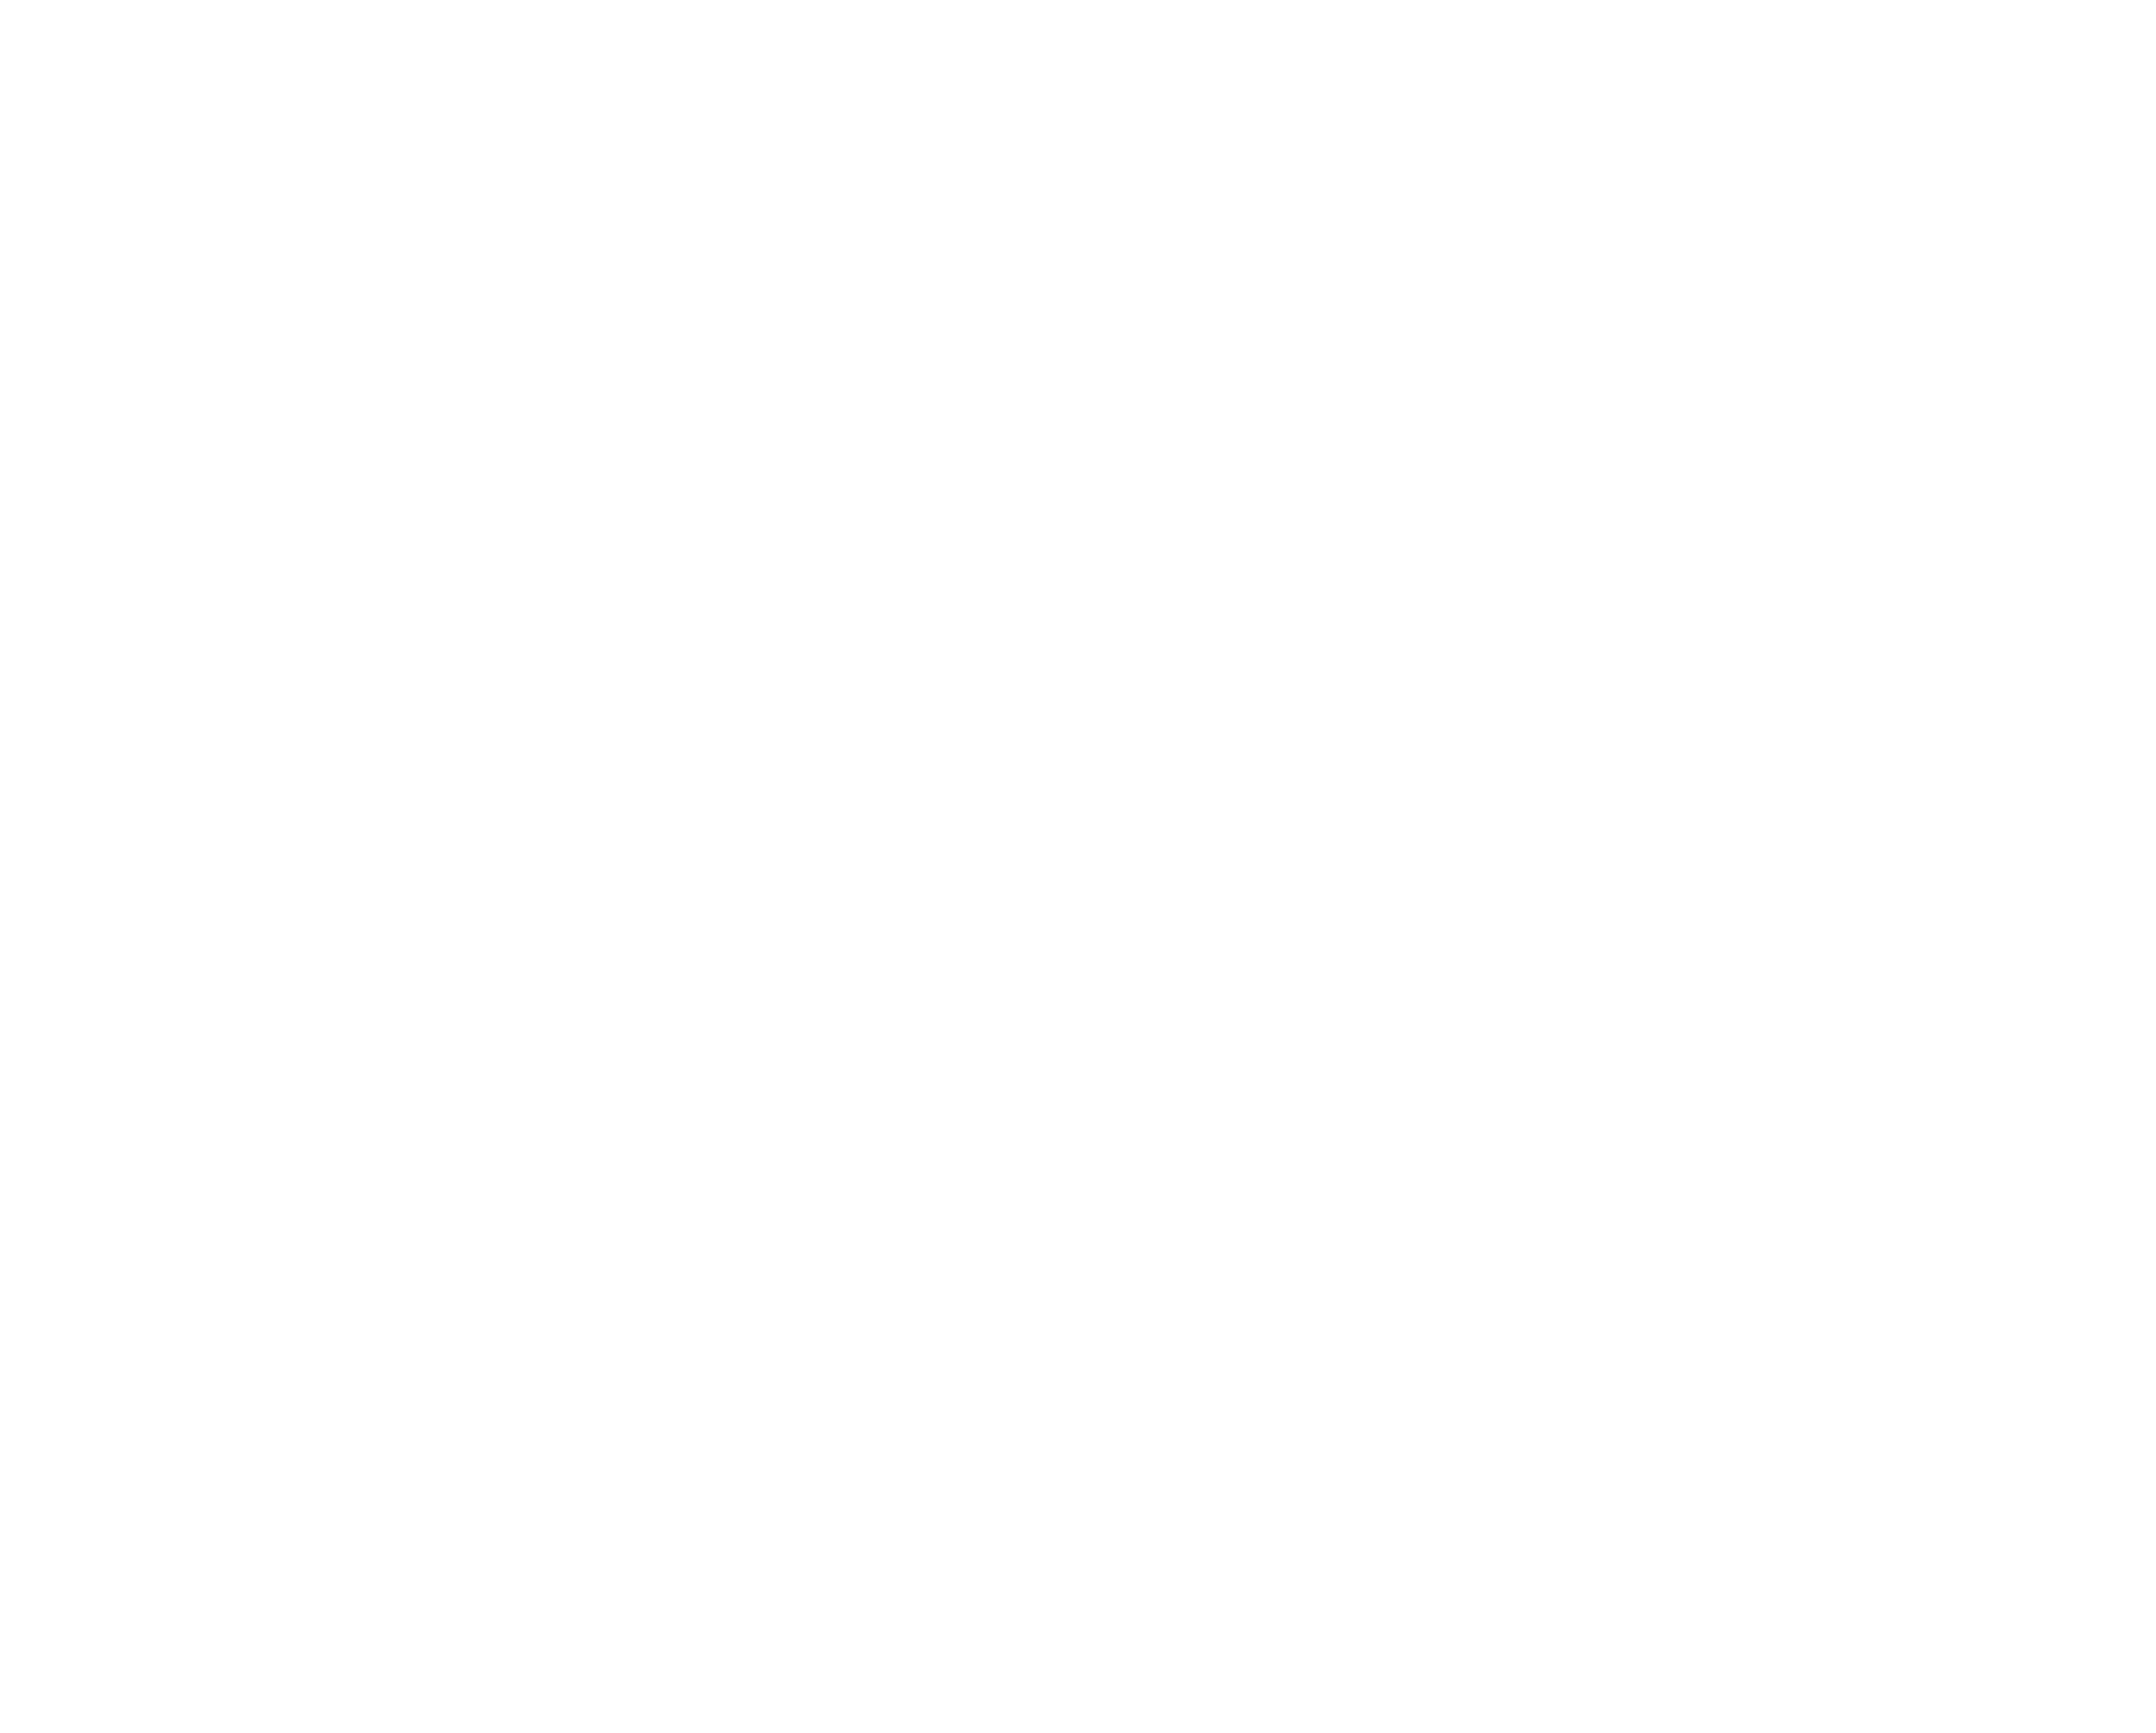 ZNN Network